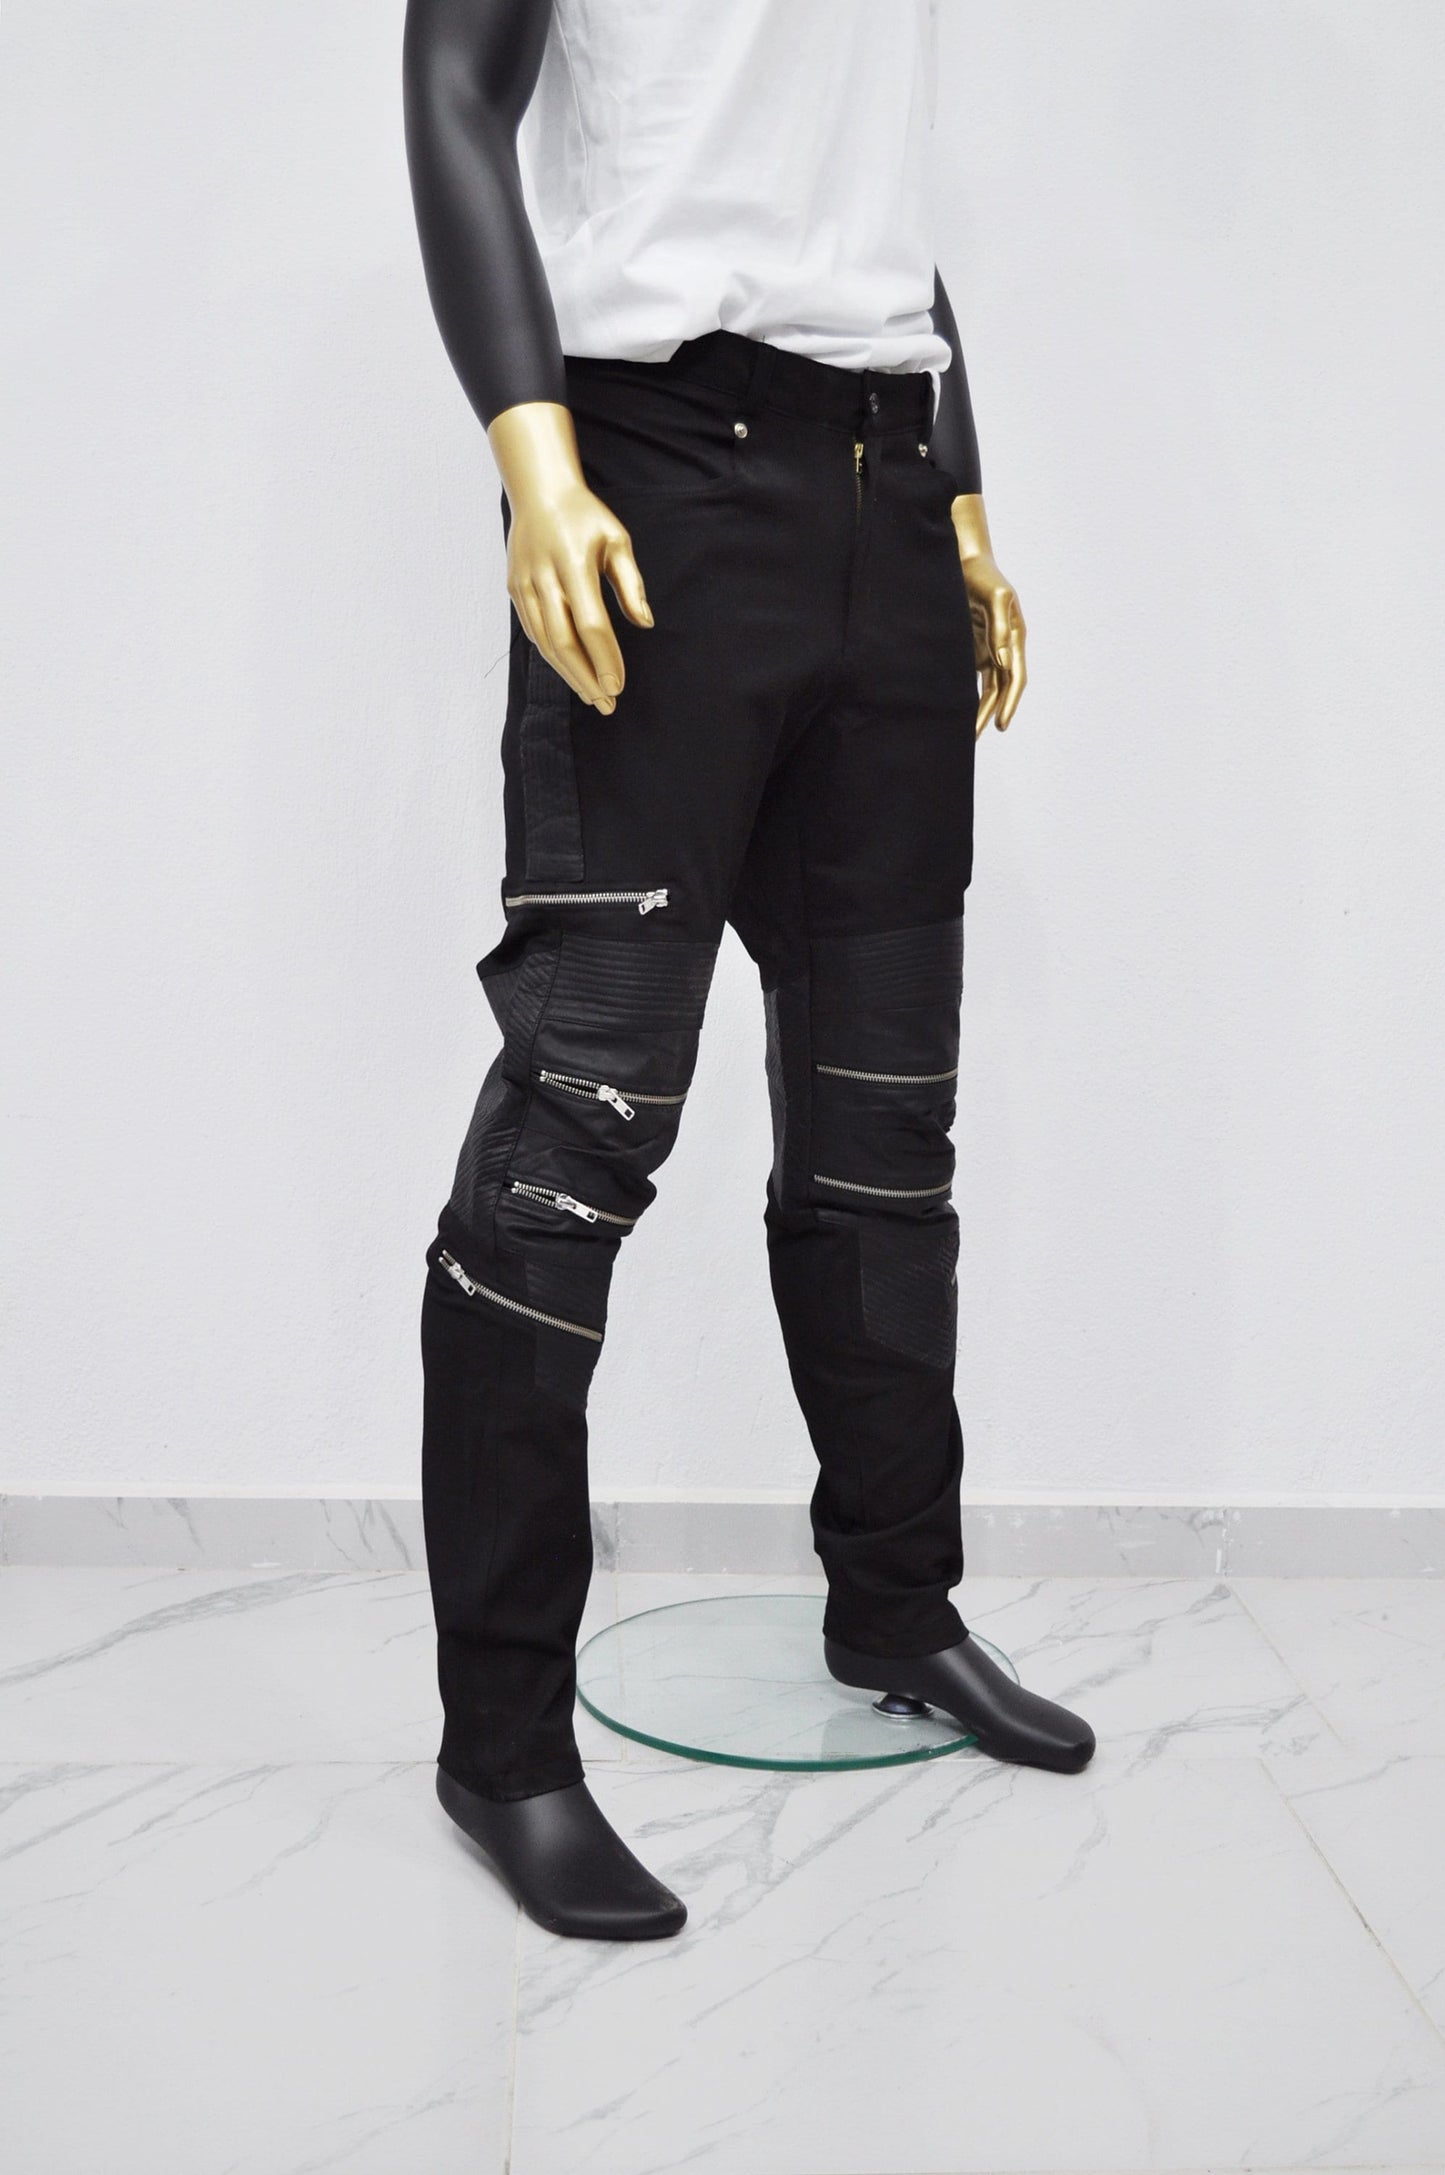 XXS - 8XL Men's Cotton with Faux Leather Biker Low Crotch Pants,False Zipper Knee,Cyberpunk Steampunk,Gothic,Streetwear Futuristic - BB202